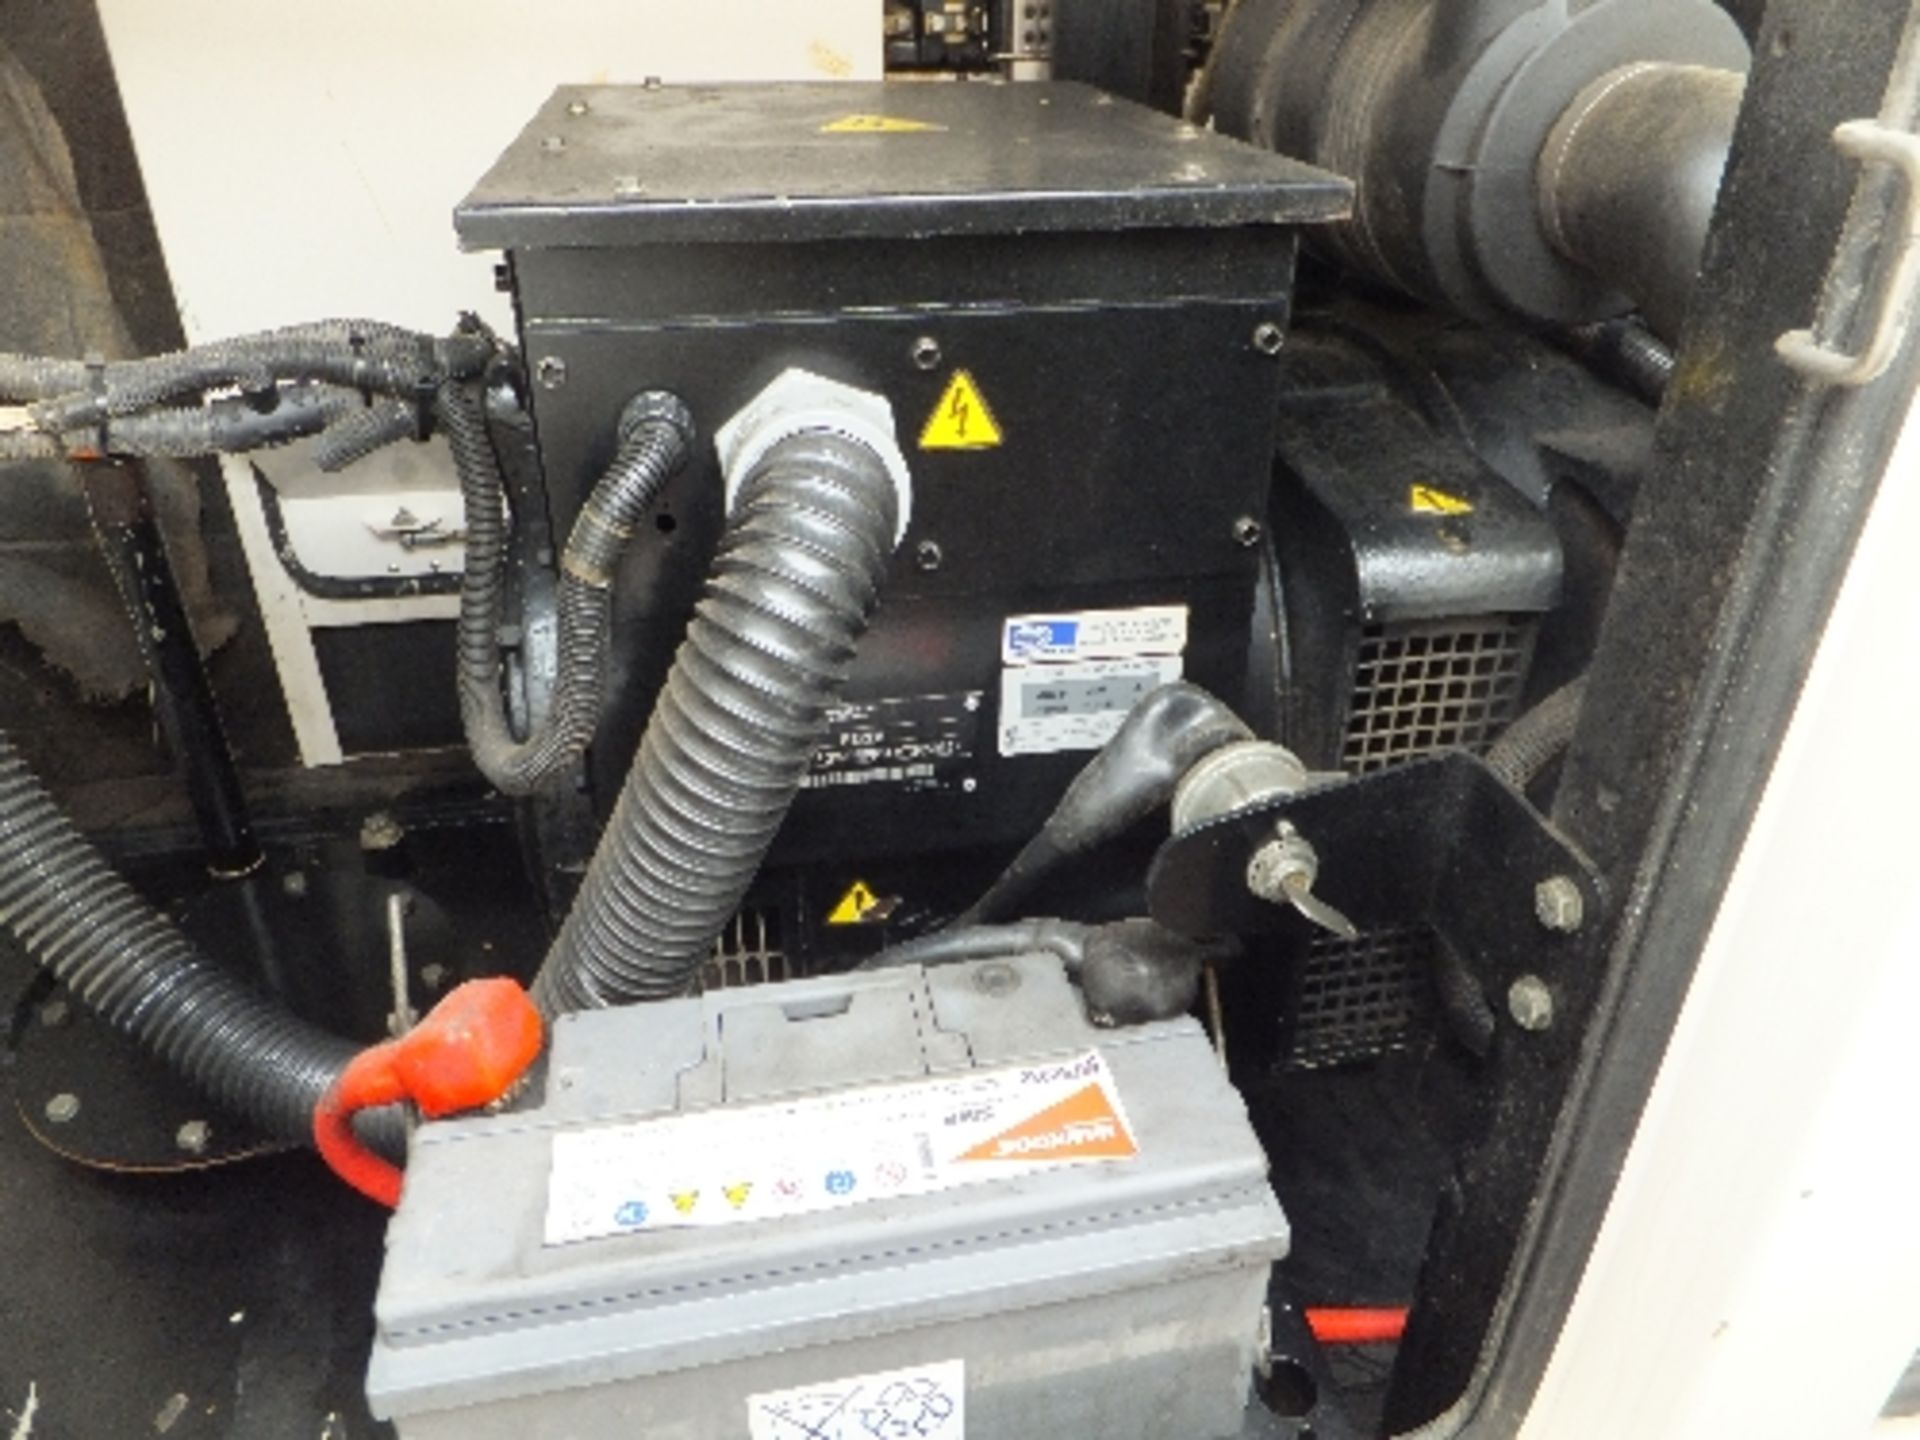 Wilson Perkins 45kva generator RMP 42,658 hours HF3757 - Image 5 of 6